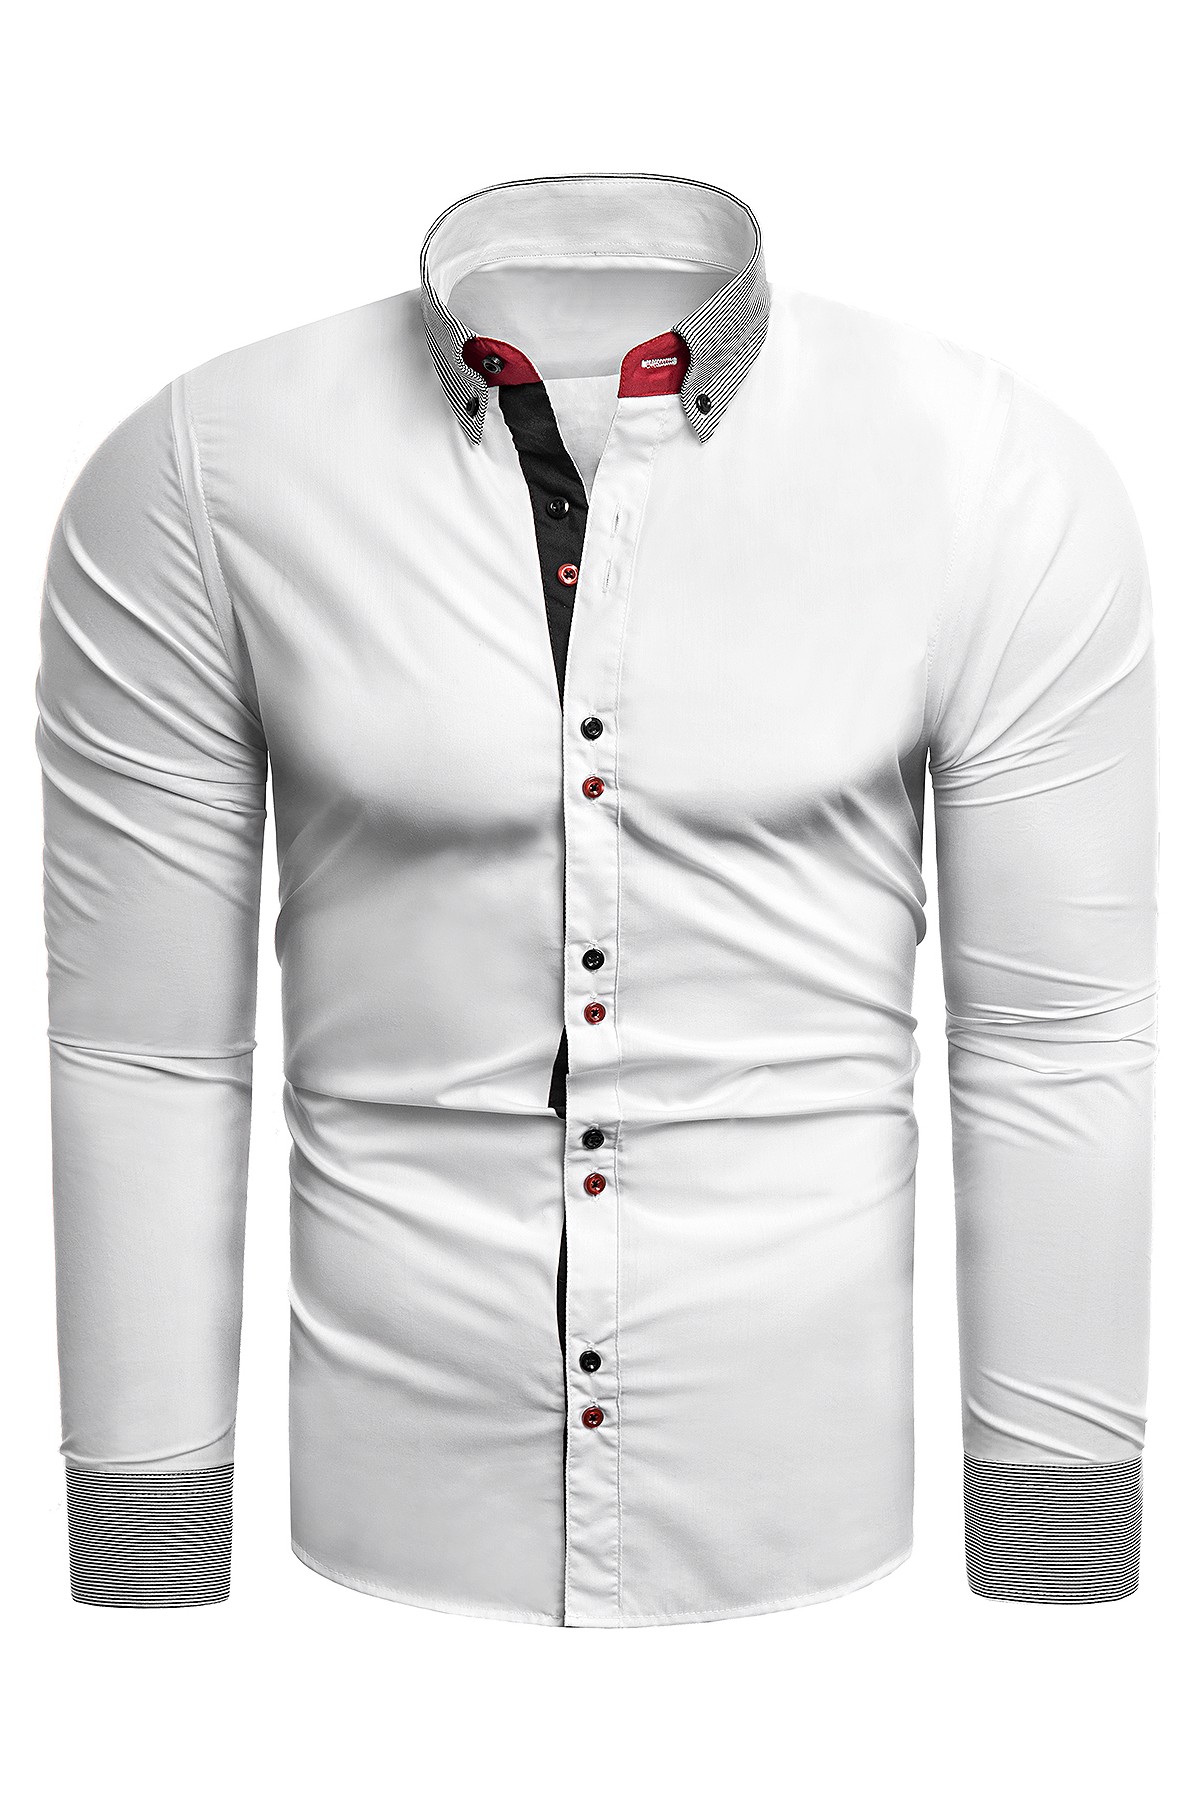 Koszula męska długi rękaw rl45 - biała